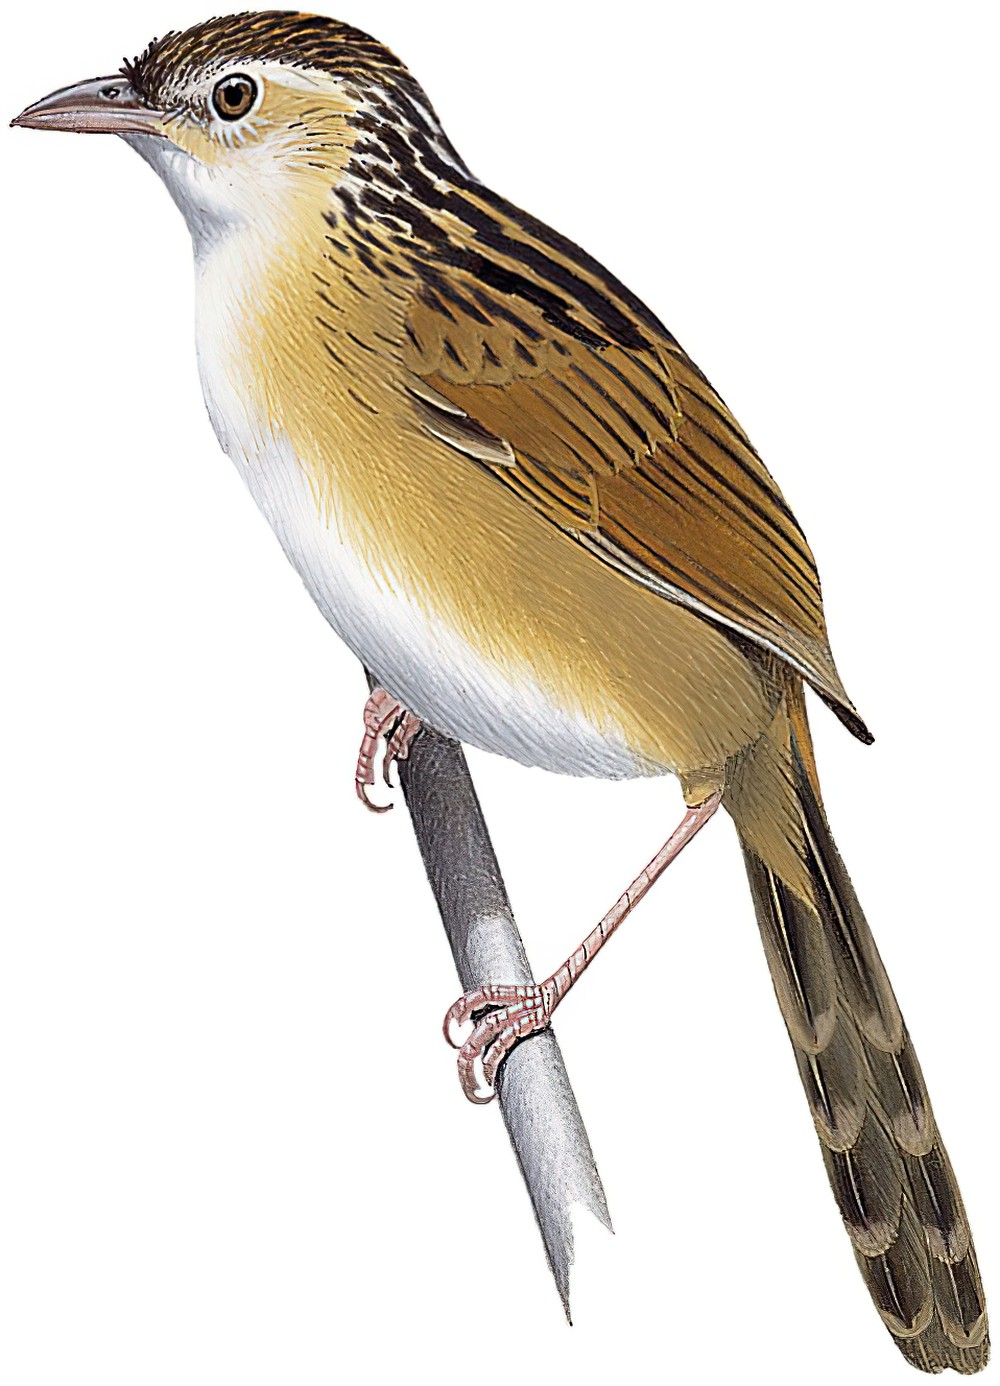 Chinese Grassbird / Graminicola striatus